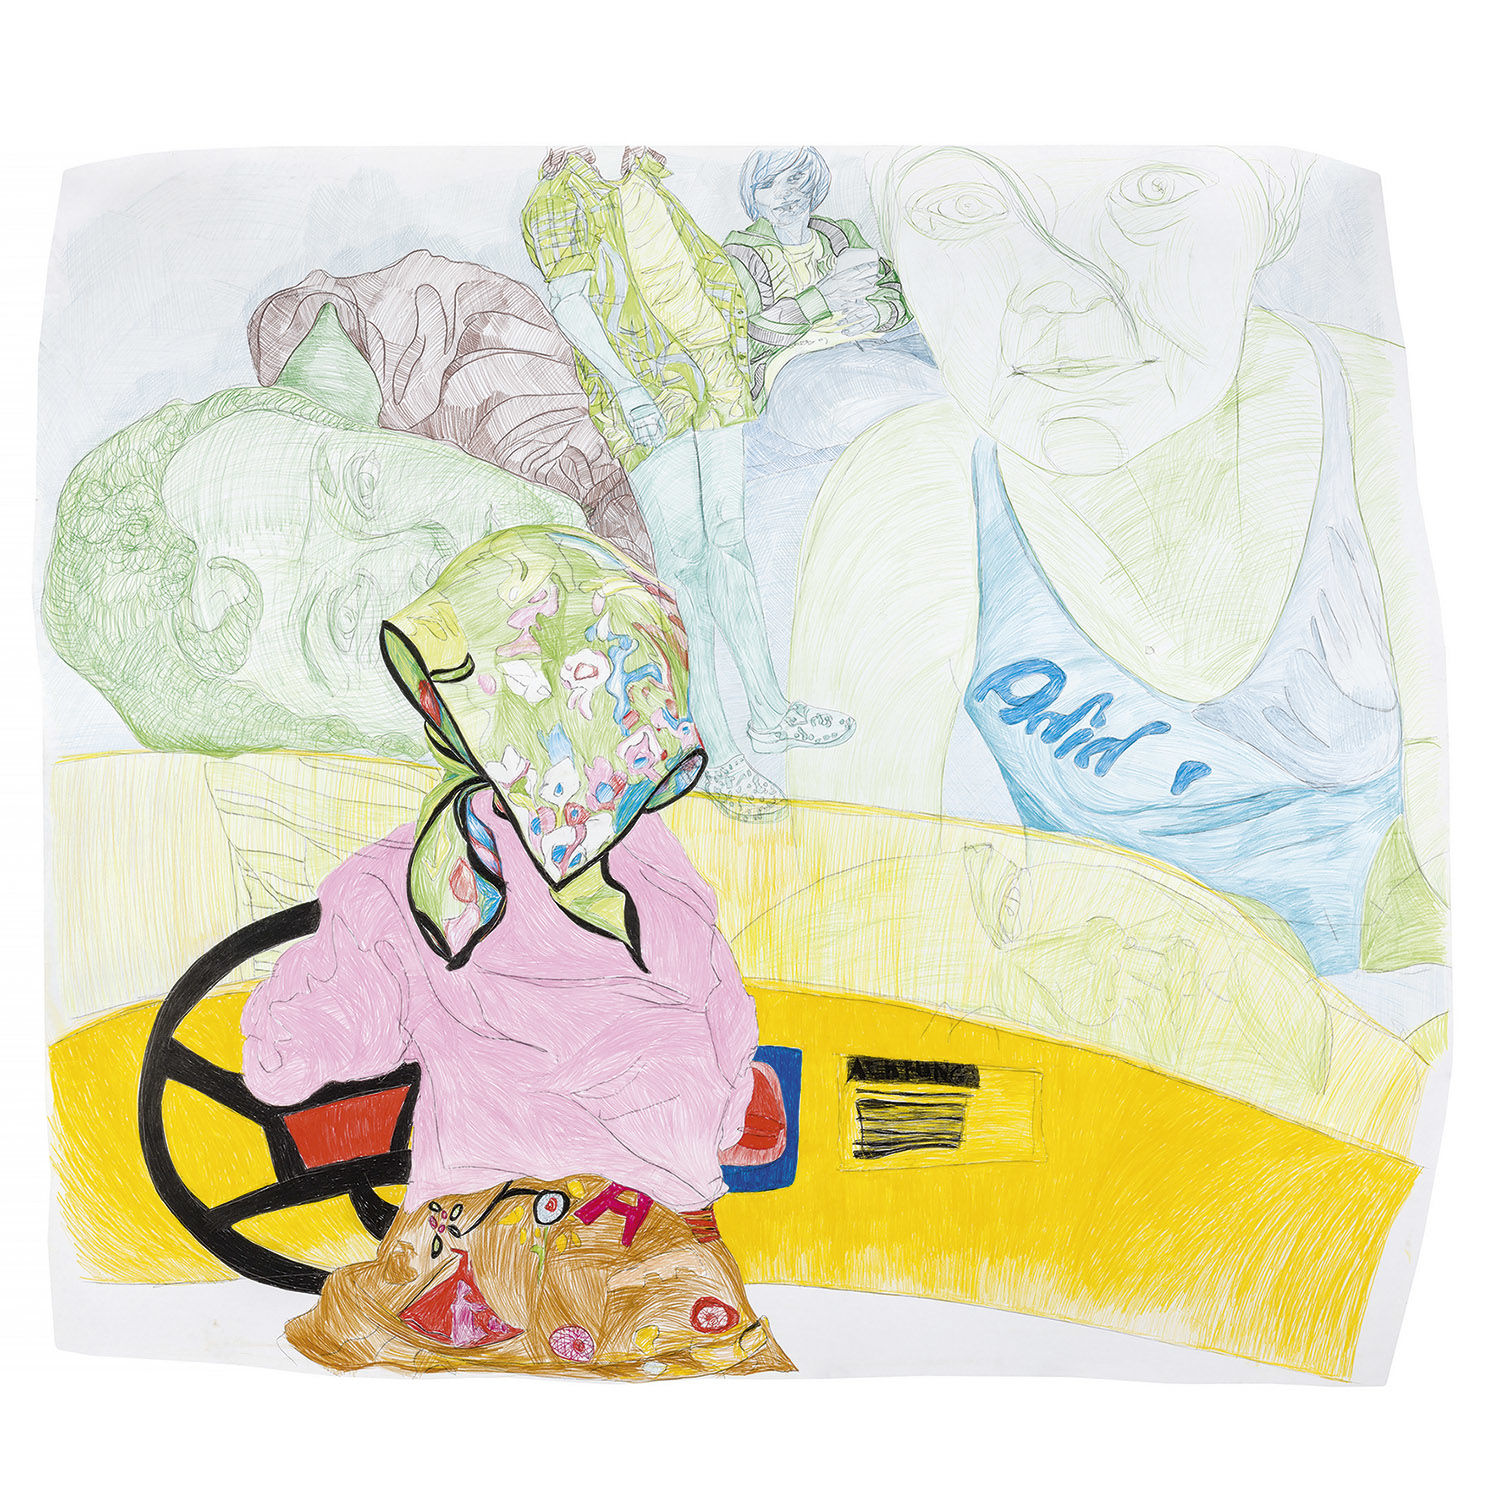 Z.K. / Uli Aigner 2013 / 181 x 203 cm / colored crayon on paper